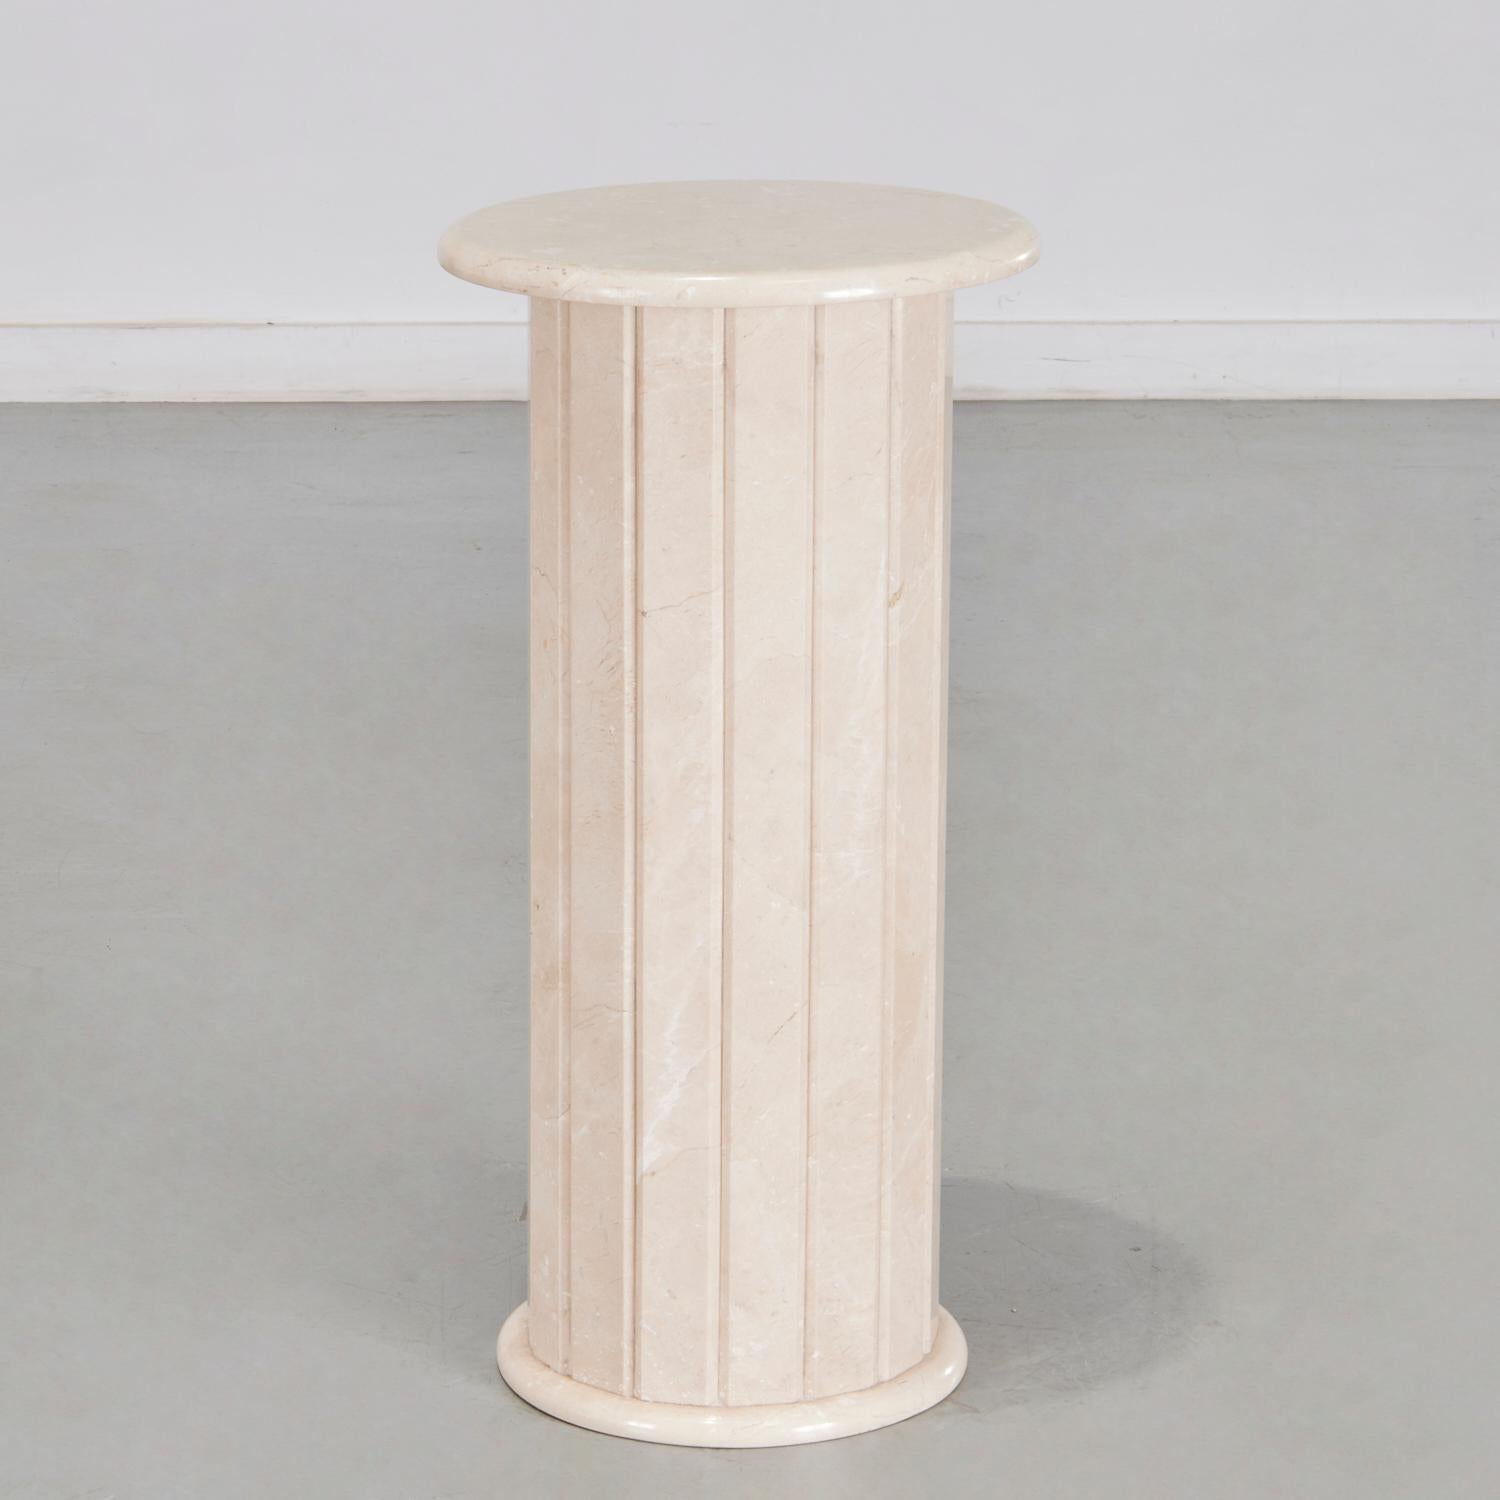 Modern Polished Fluted Travertine Column Pedestal in Soft Pale Earth Tones For Sale 1